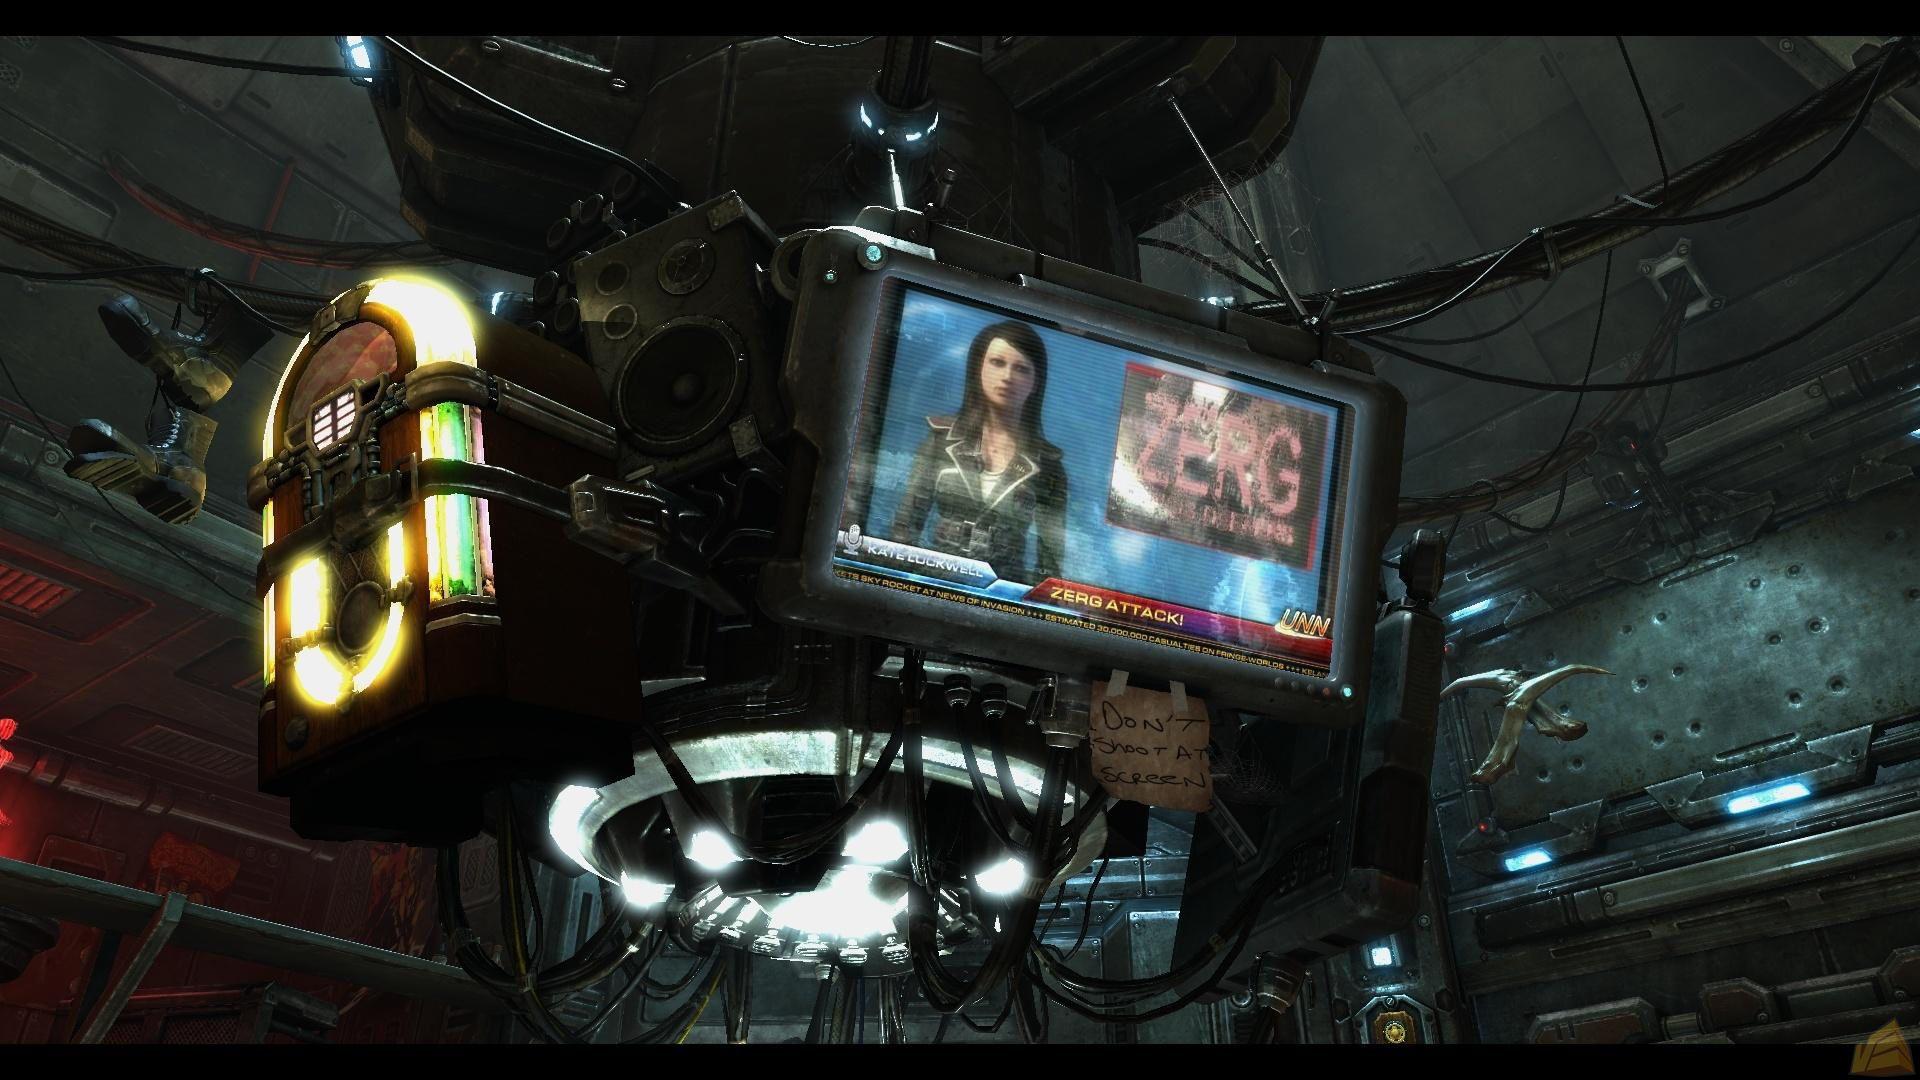 Descarga gratuita de fondo de pantalla para móvil de Starcraft, Videojuego.